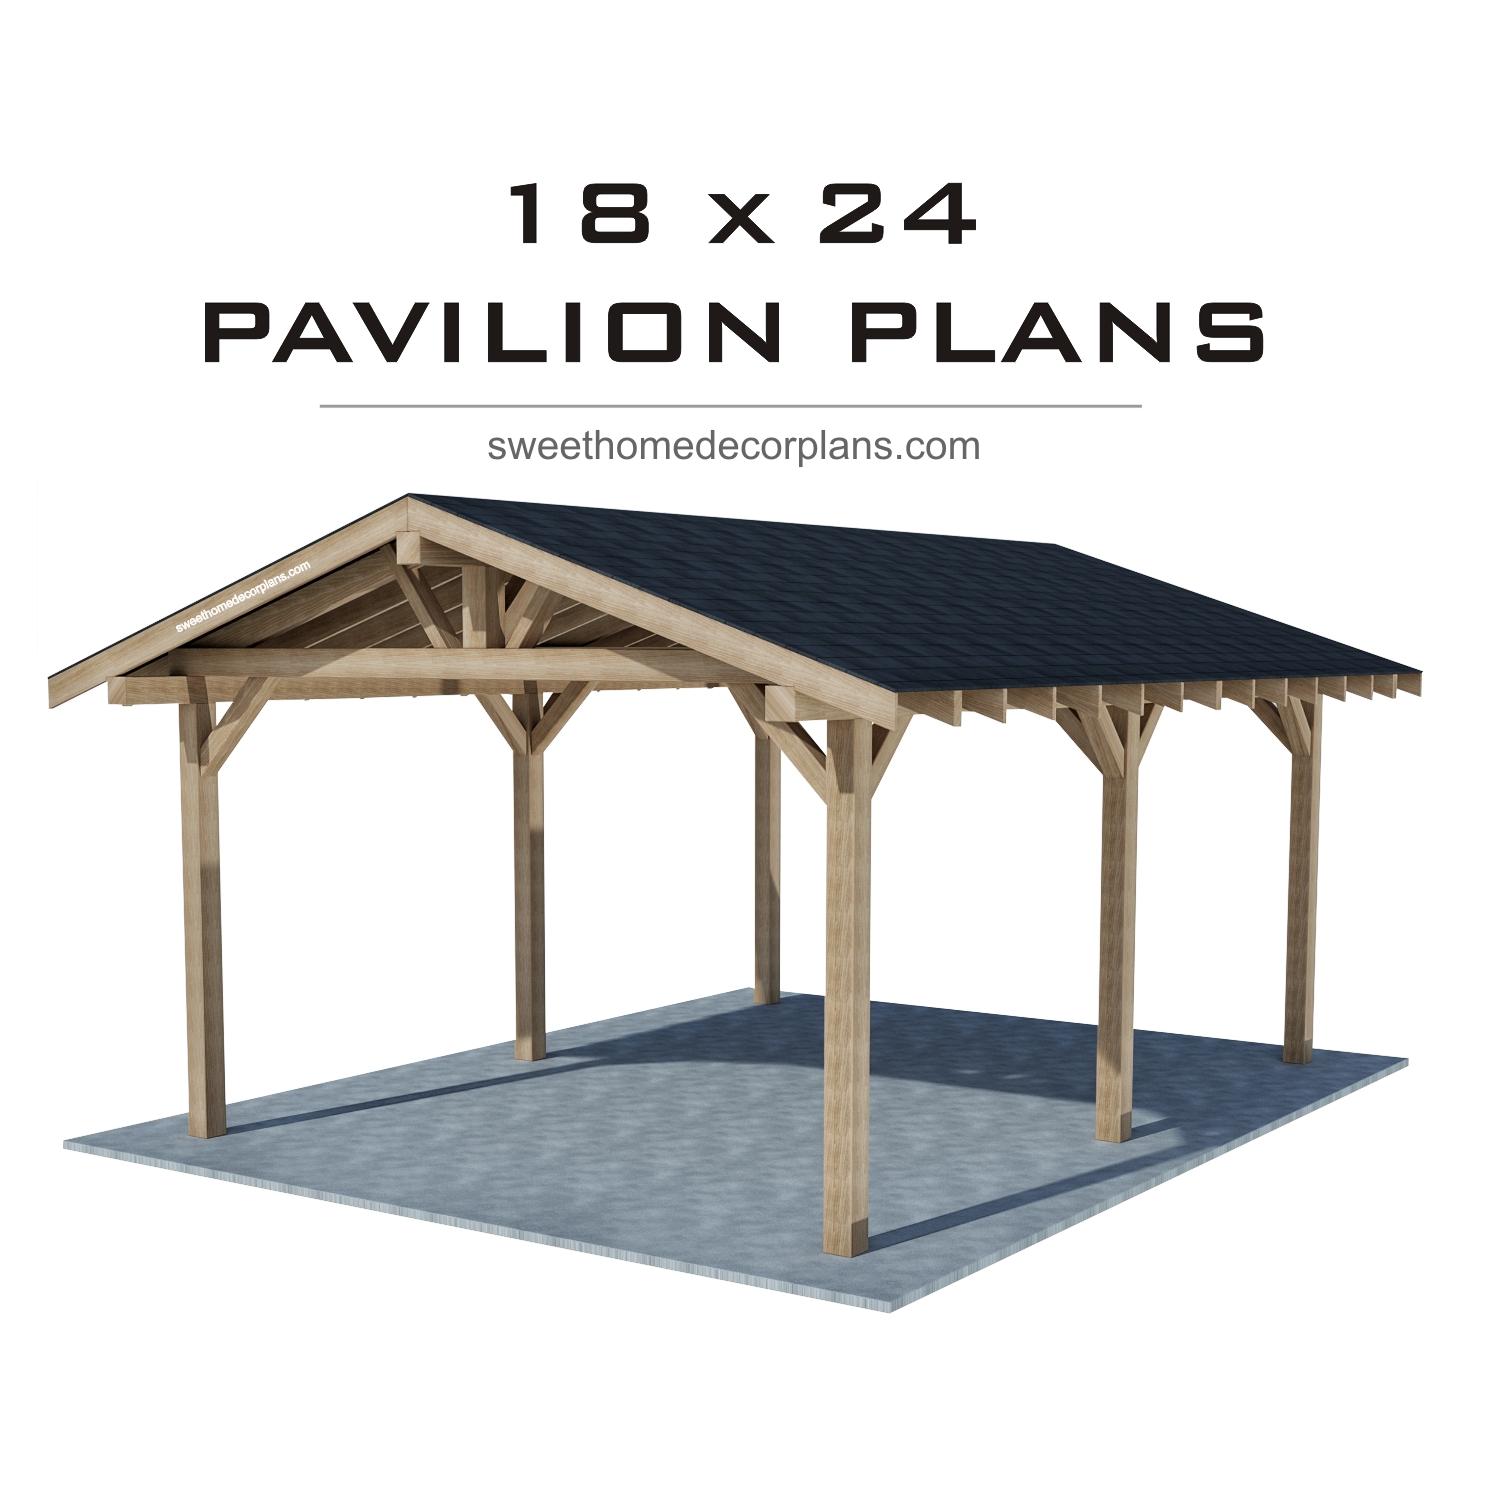 Diy-wooden-18-х-24-gable-pavilion-plans-carport-gazebo-patio